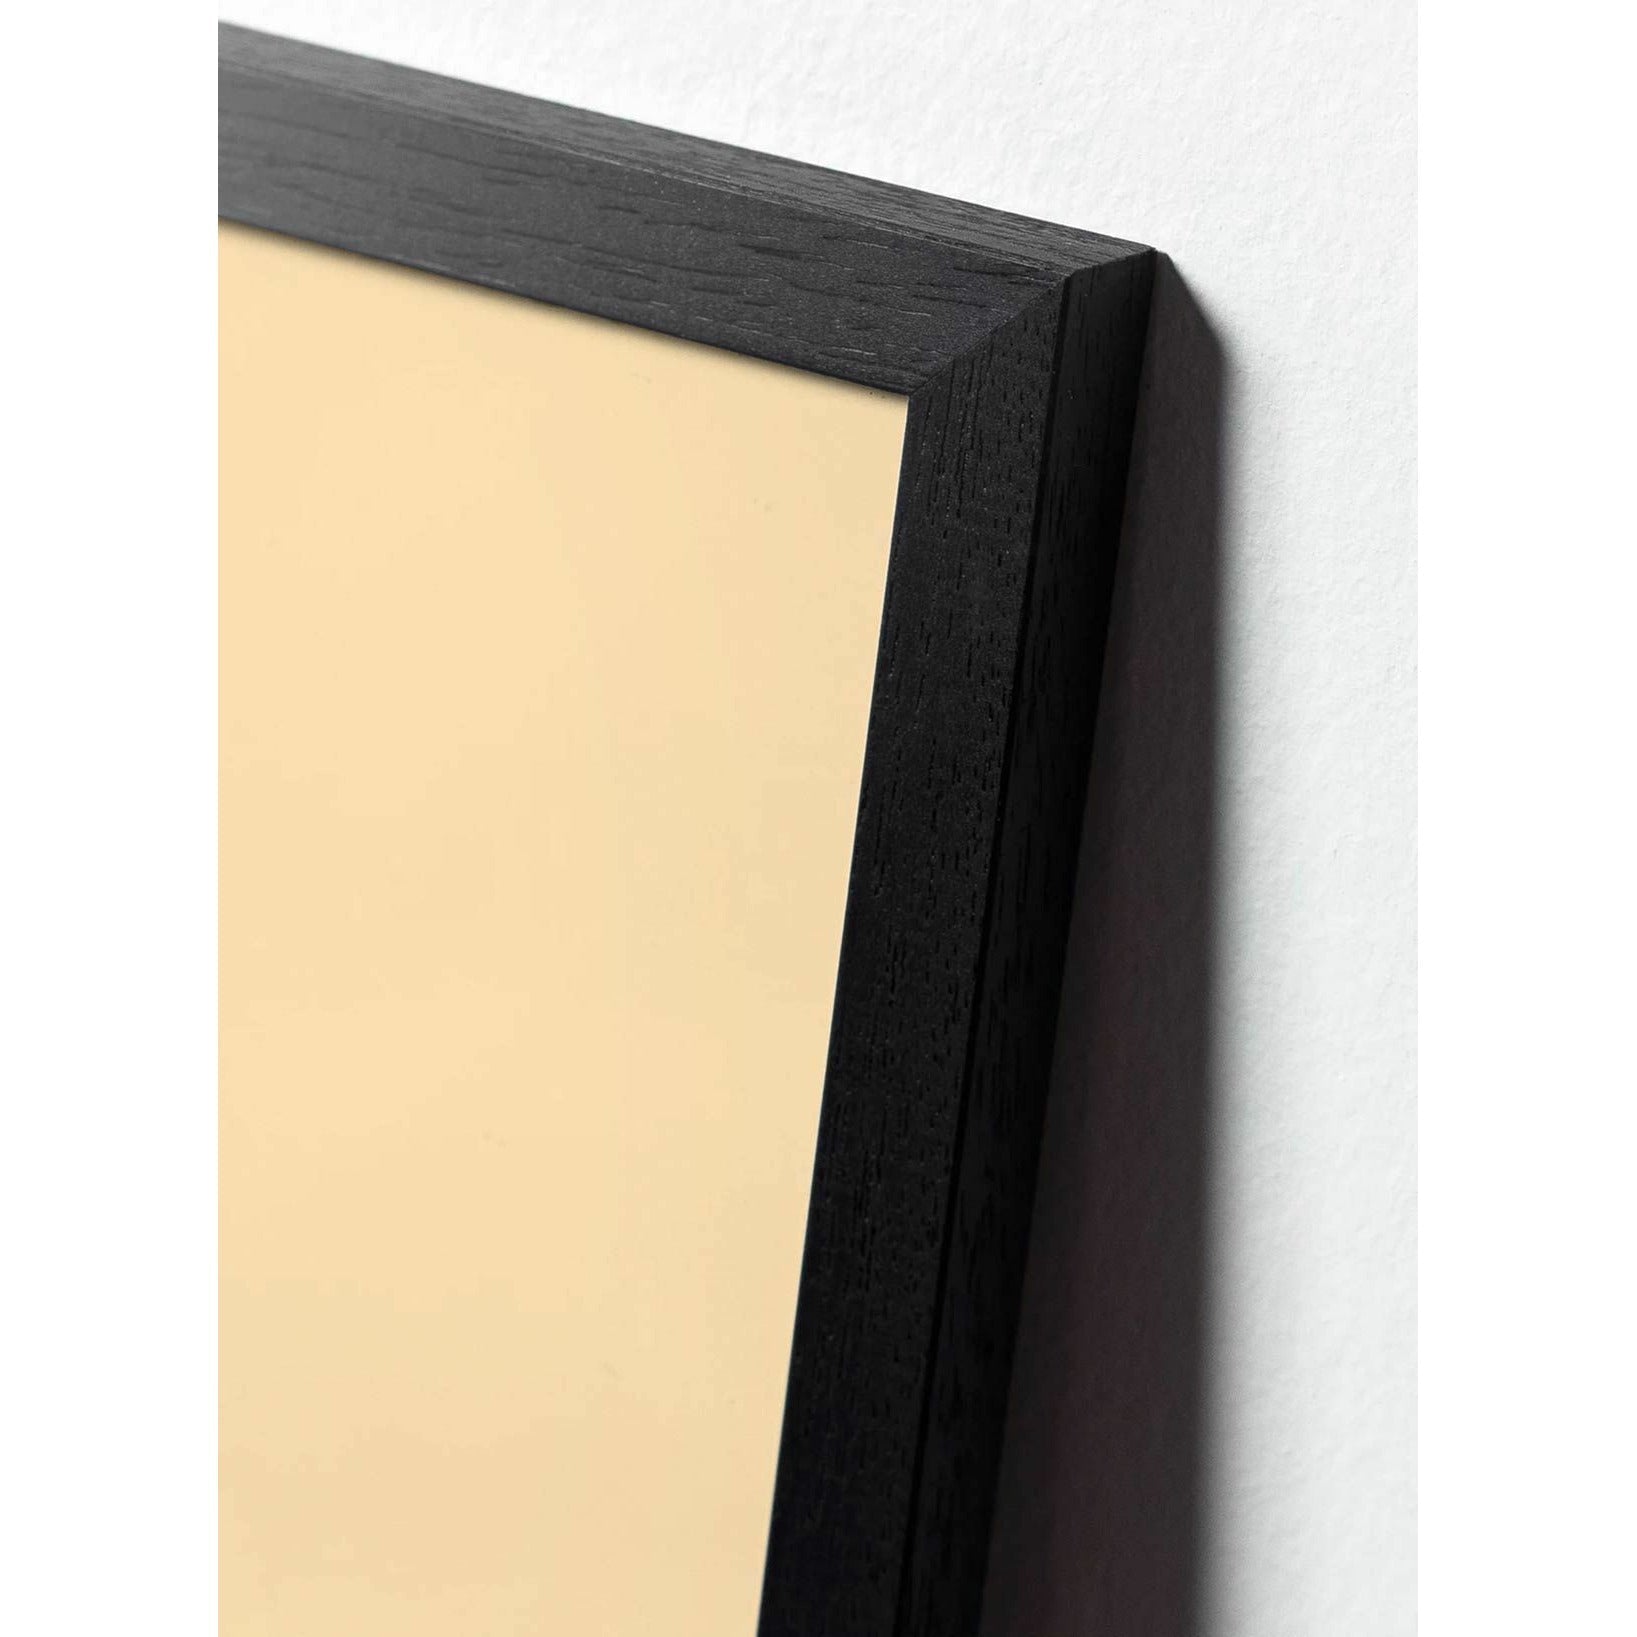 Brainchild Design Icon Poster, Frame In Black Lacquered Wood 30x40 Cm, Colour